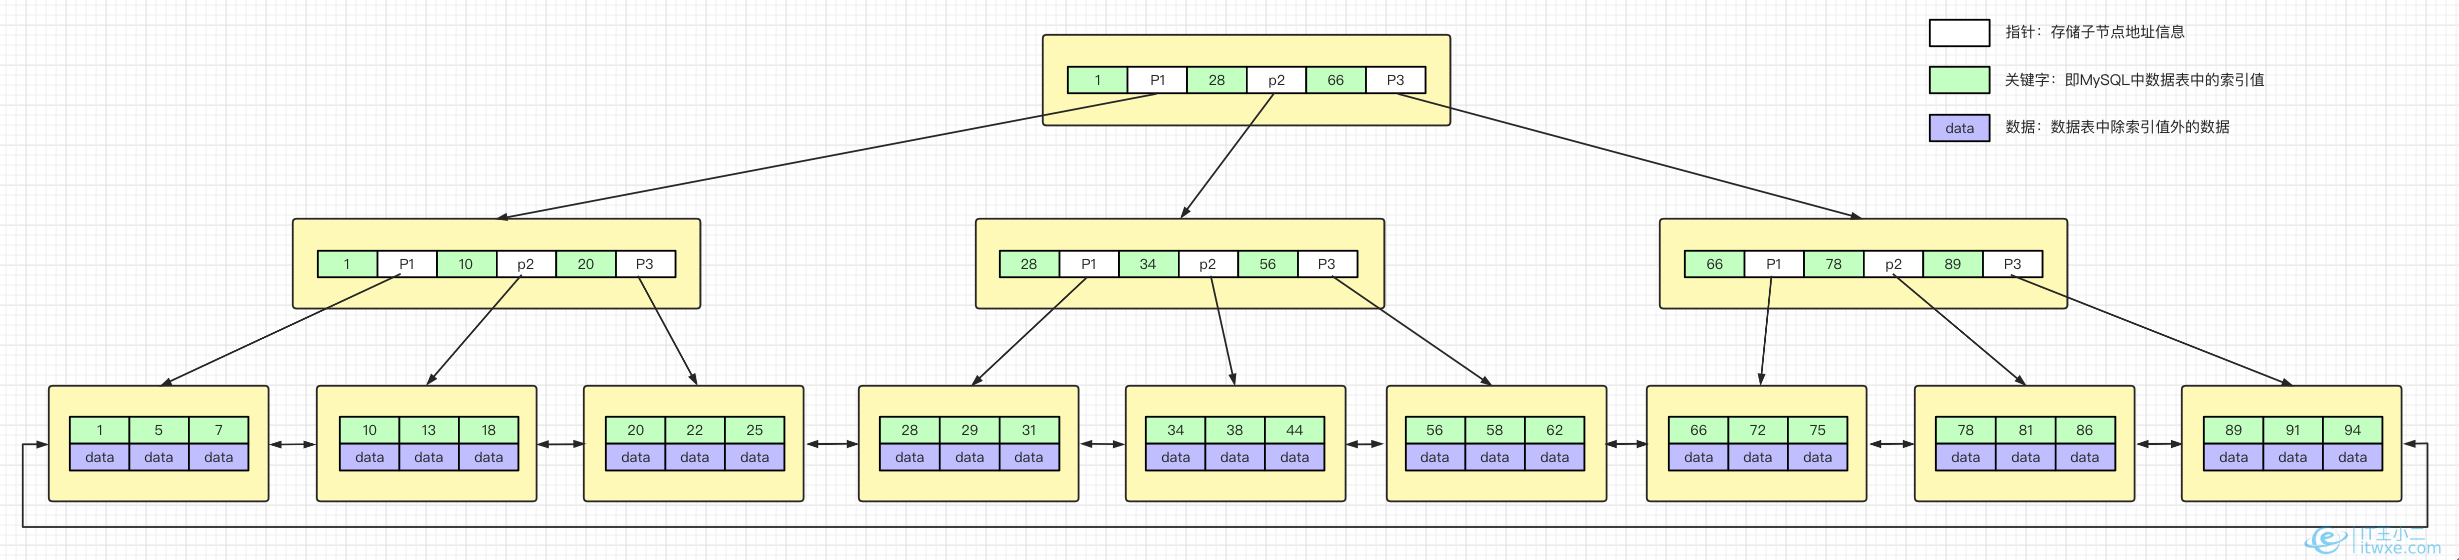 B+tree数据结构